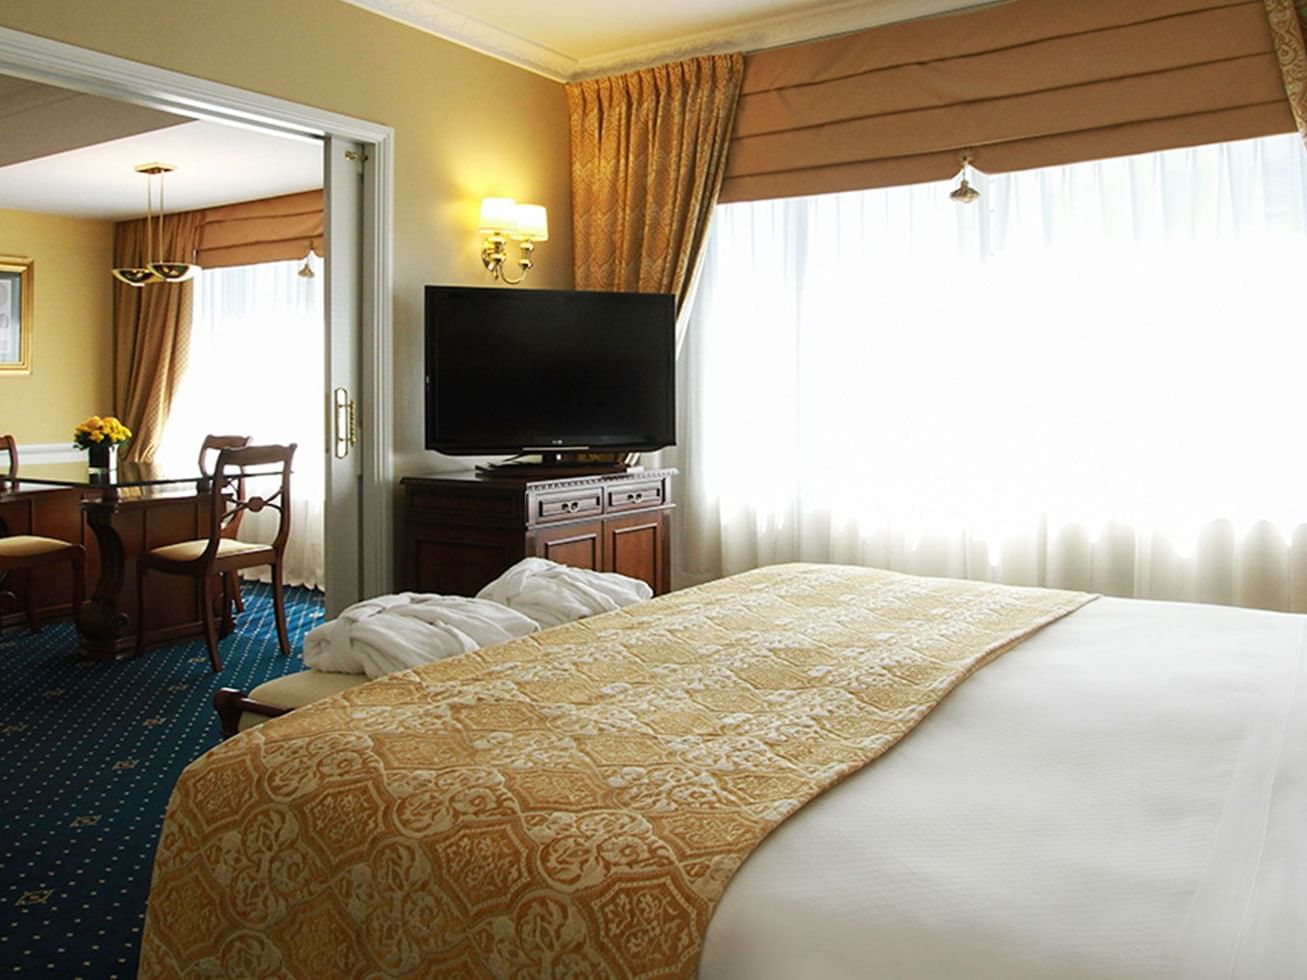 A bed, TV & sitting area at a suite in Hotel Emperador Buenos